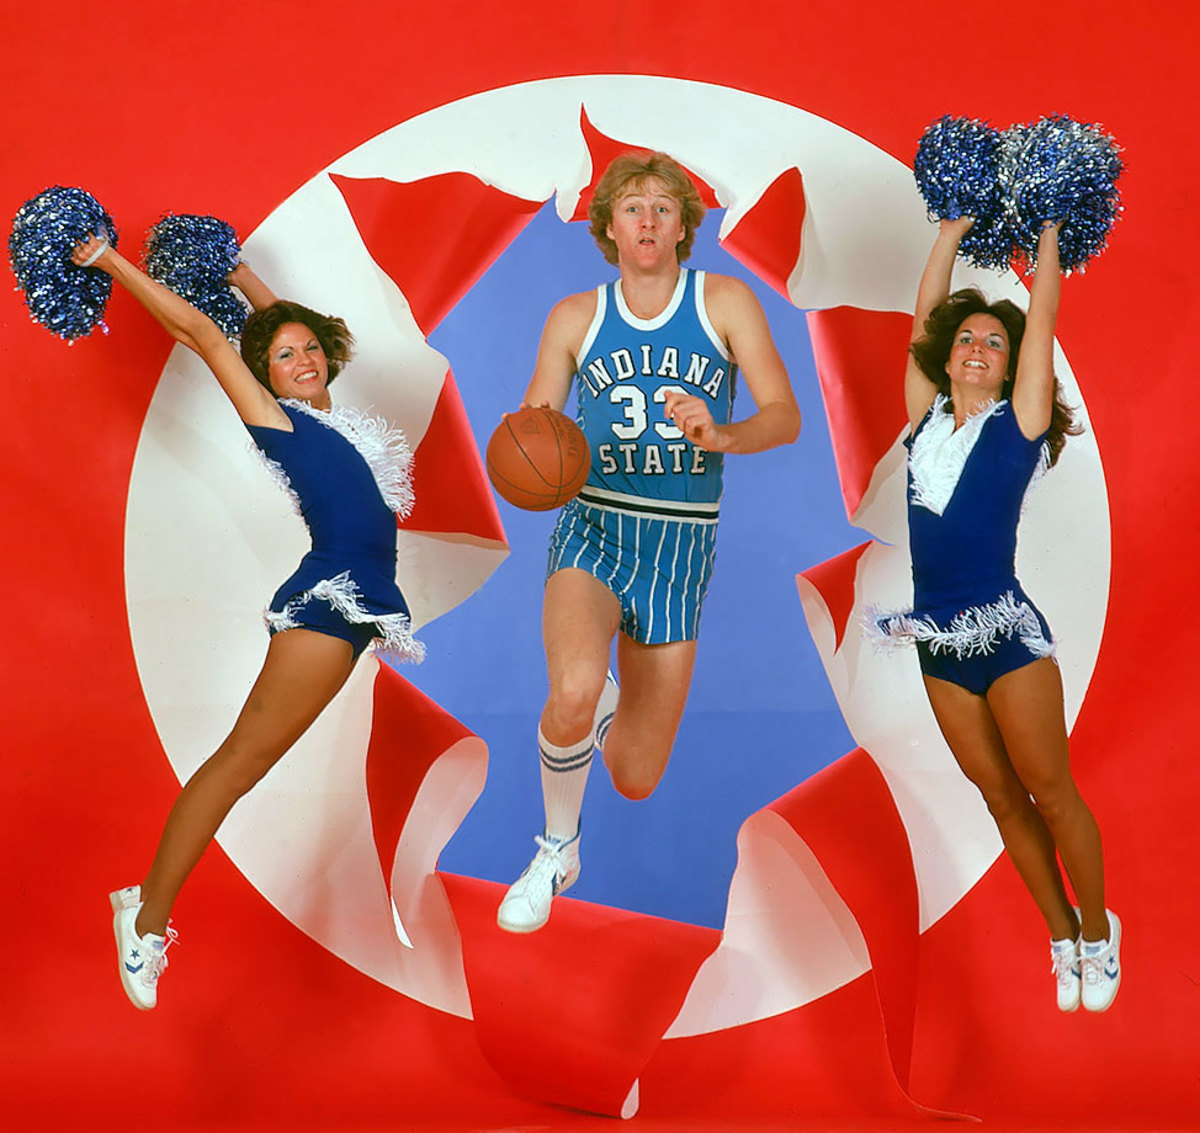 1977-1101-Larry-Bird-Indiana-State-cheerleaders-079004077.jpg